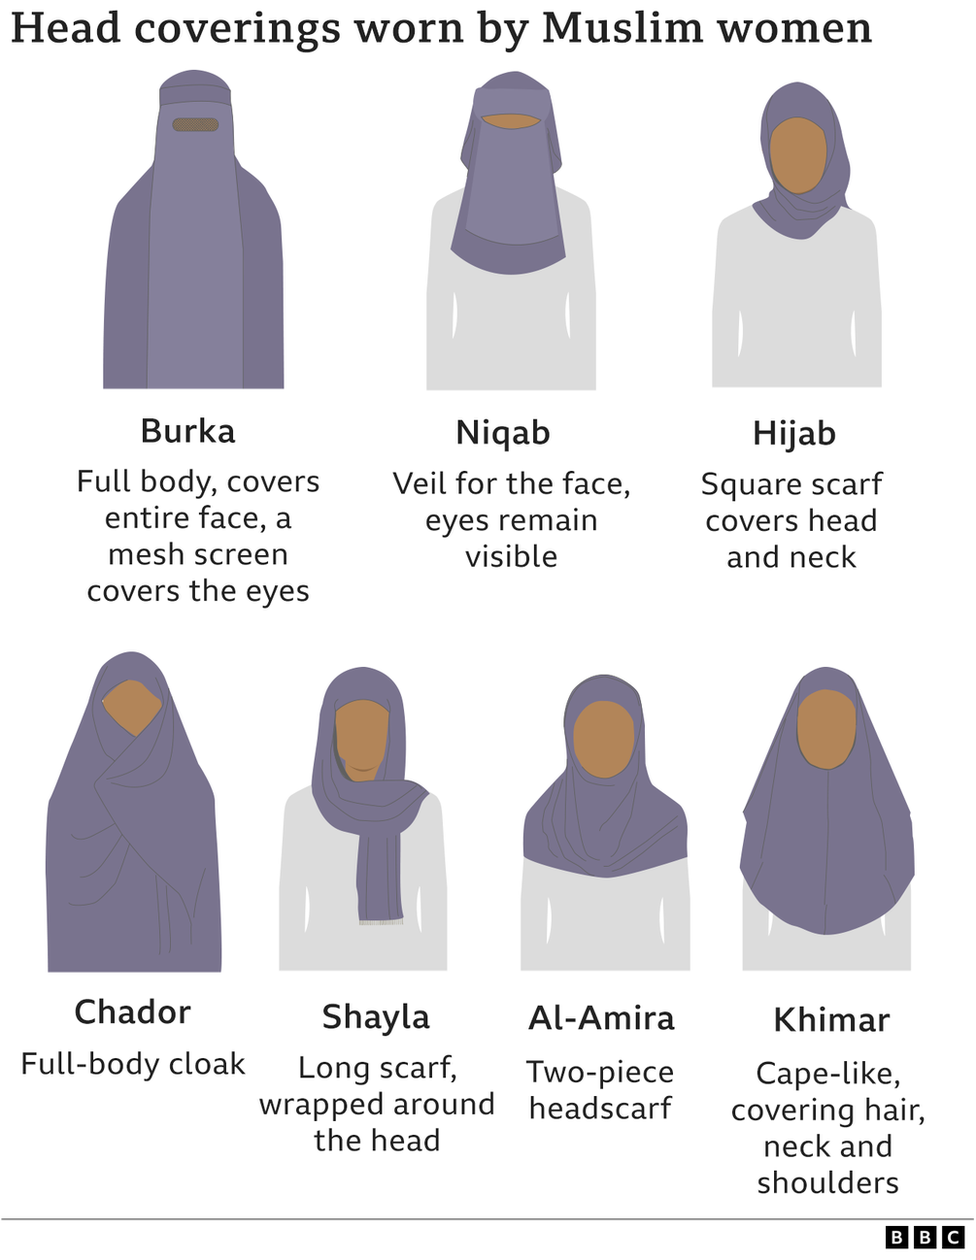 Head coverings worn by Muslim women